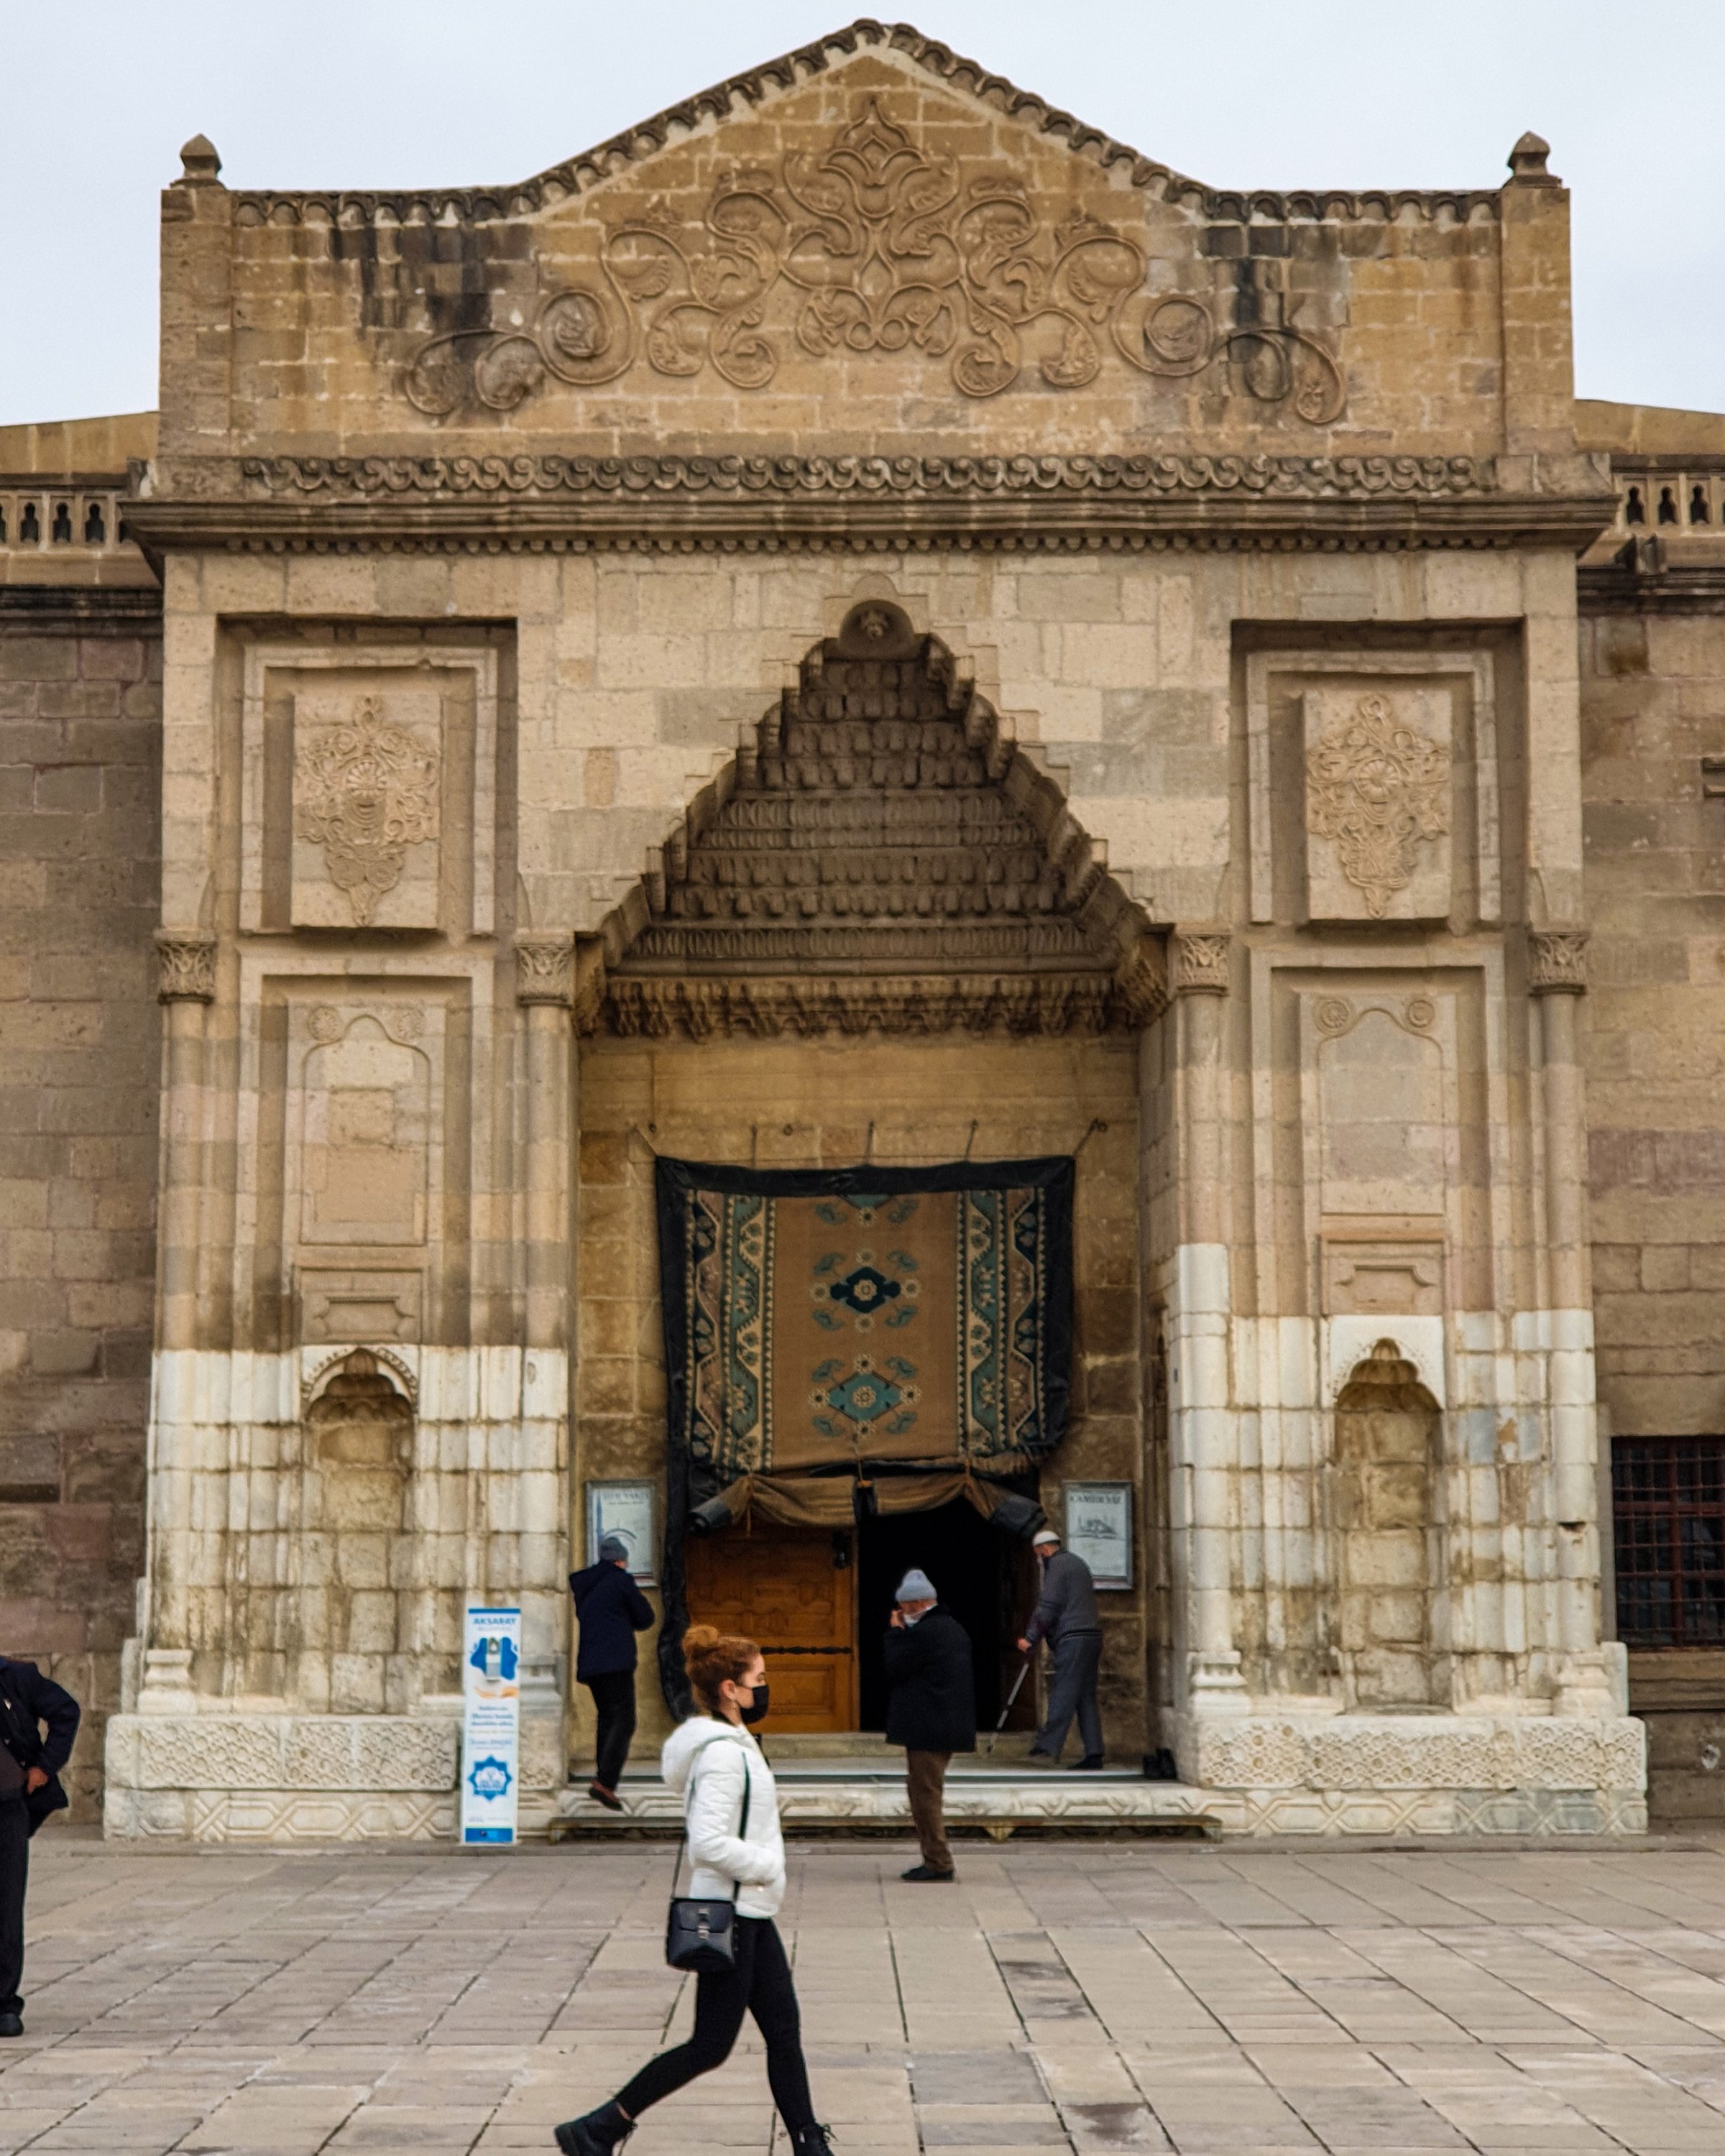 The main entrance to Aksaray Grand Mosque, Aksaray, central Turkey. (Photo by Argun Konuk)